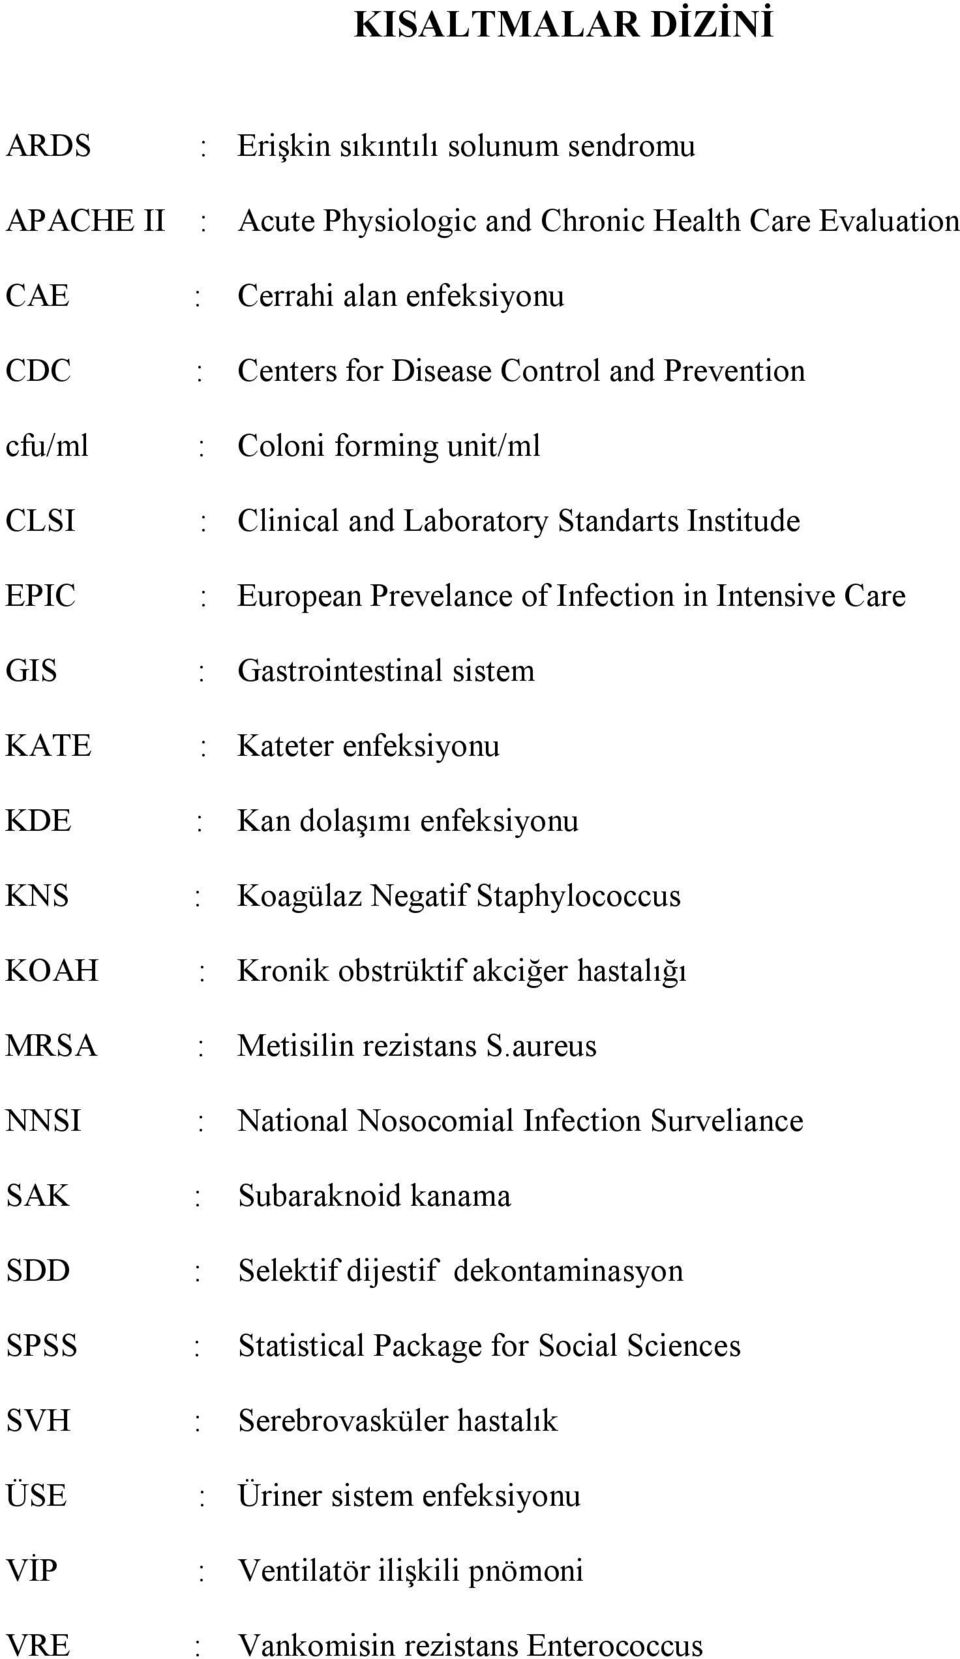 enfeksiyonu KDE : Kan dolaşımı enfeksiyonu KNS : Koagülaz Negatif Staphylococcus KOAH MRSA NNSI : Kronik obstrüktif akciğer hastalığı : Metisilin rezistans S.